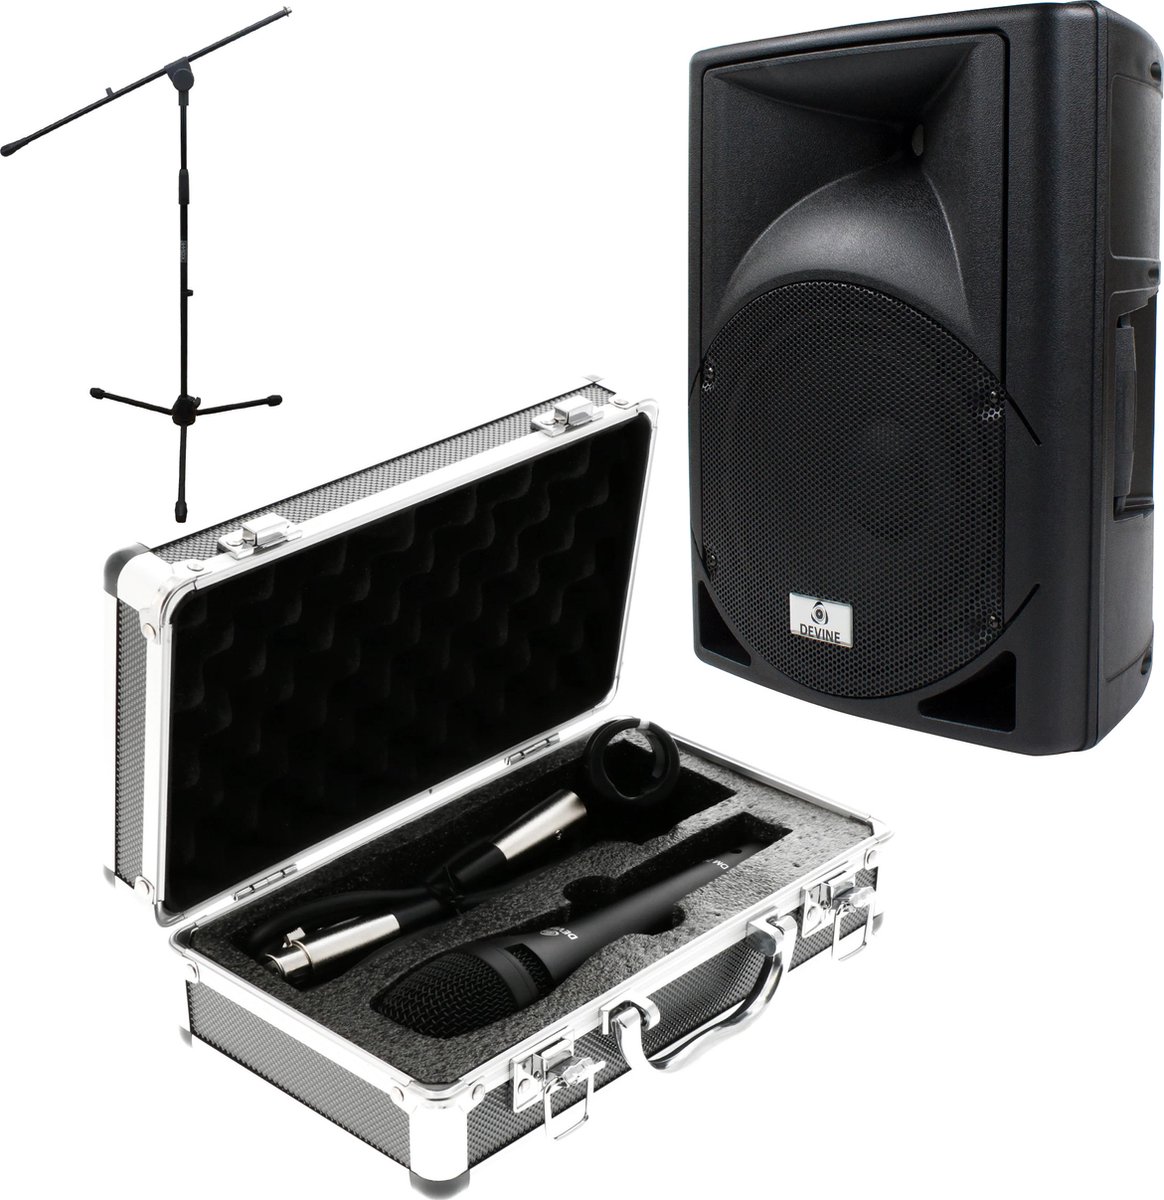 Devine DM 70 + Artis 10A speaker + accessoires | bol.com